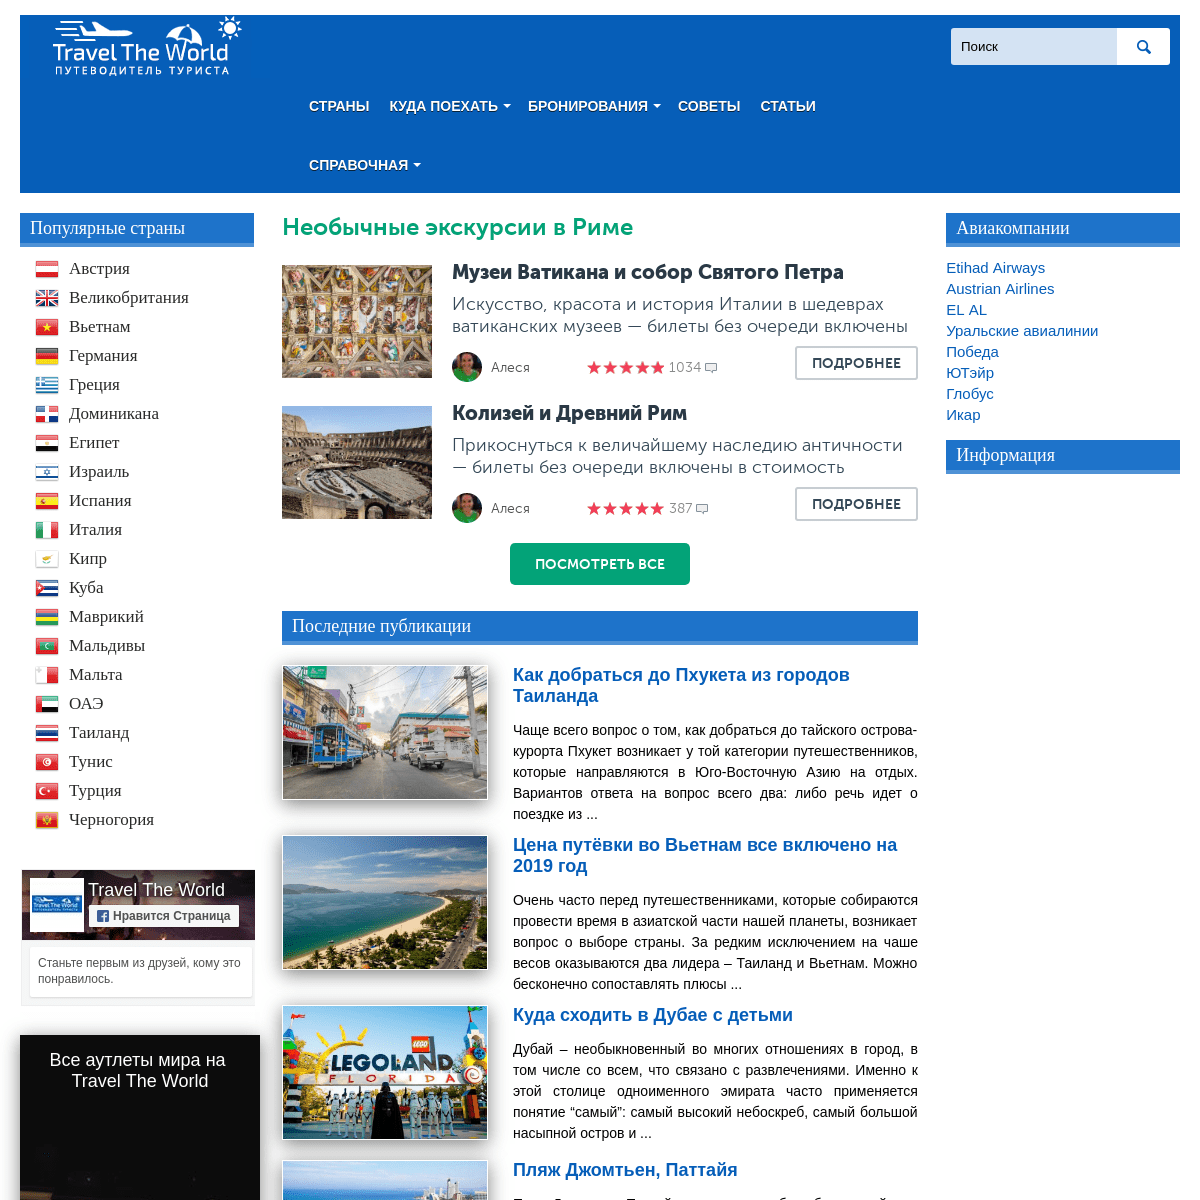 A complete backup of traveltheworld.com.ua